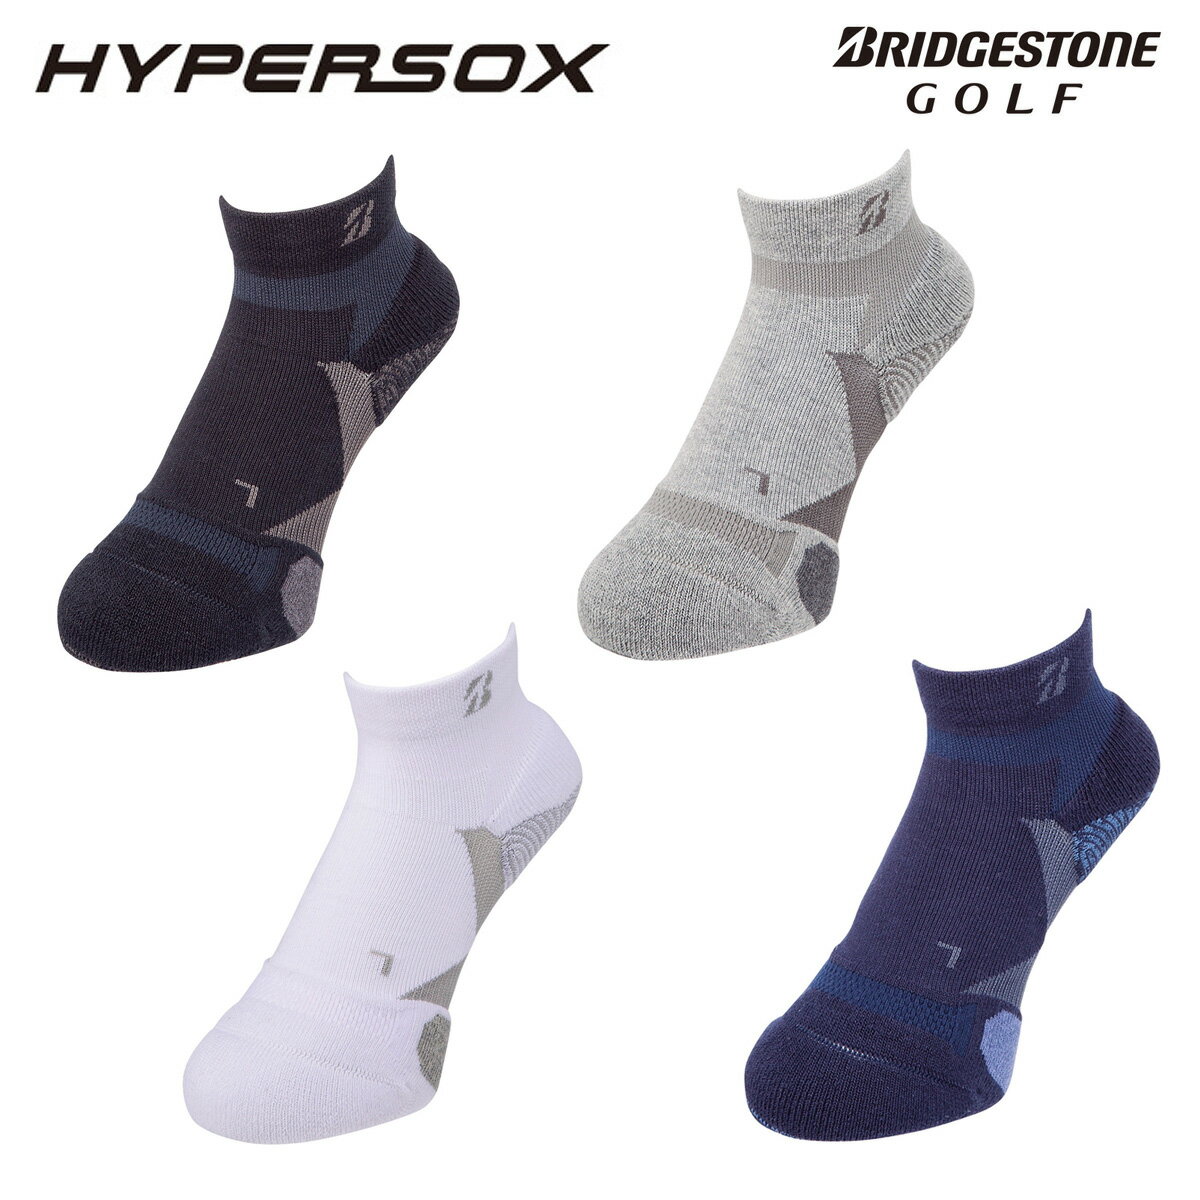 BRIDGESTONE GOLF ブリヂストンゴルフ日本正規品 HYPERSOX ハイパーソックス 3Dソックスベーシック メ...